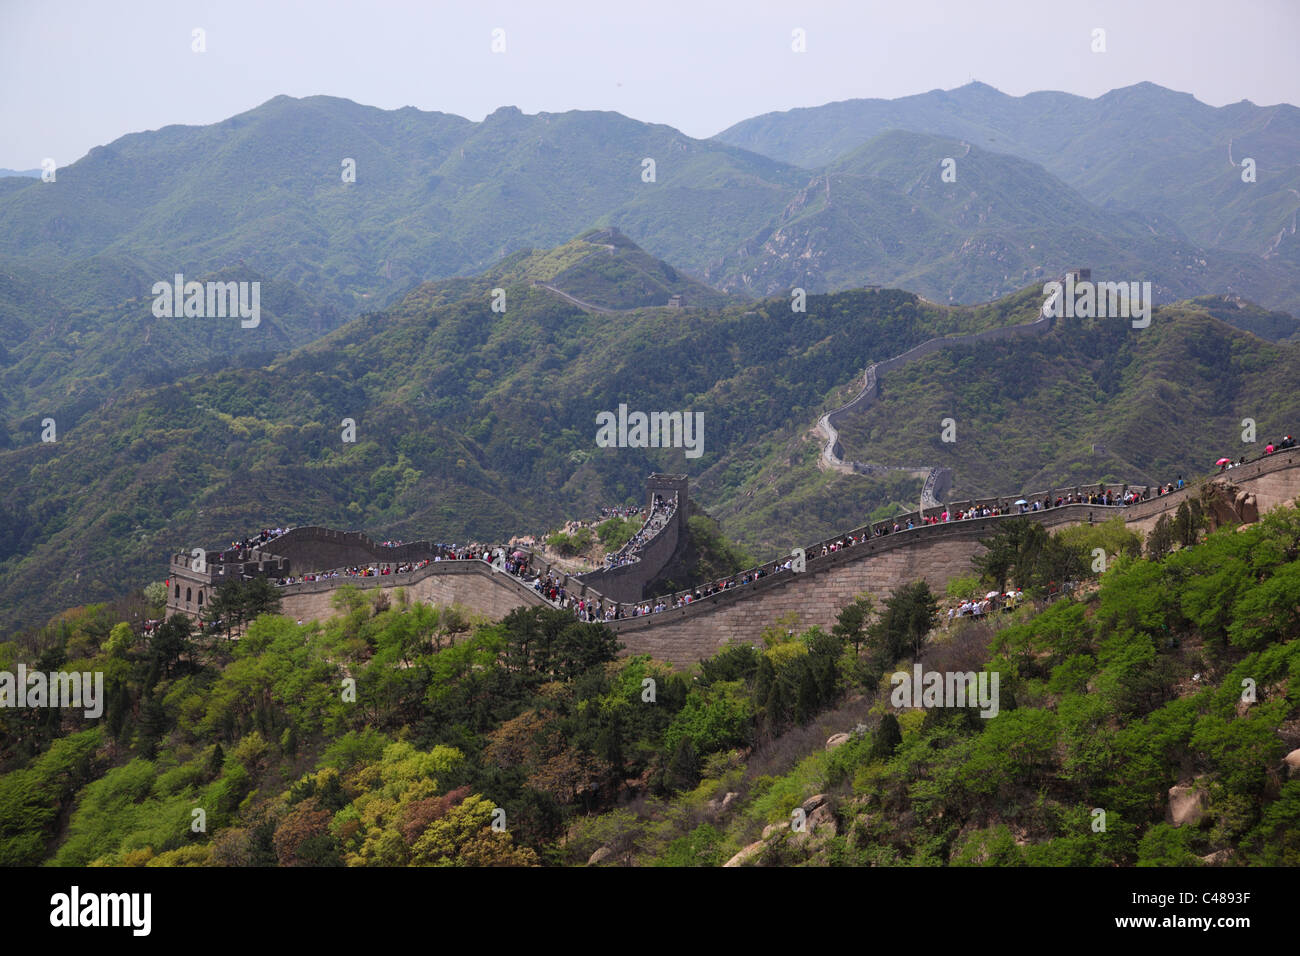 Great Wall of China, Beijing, China Stock Photo